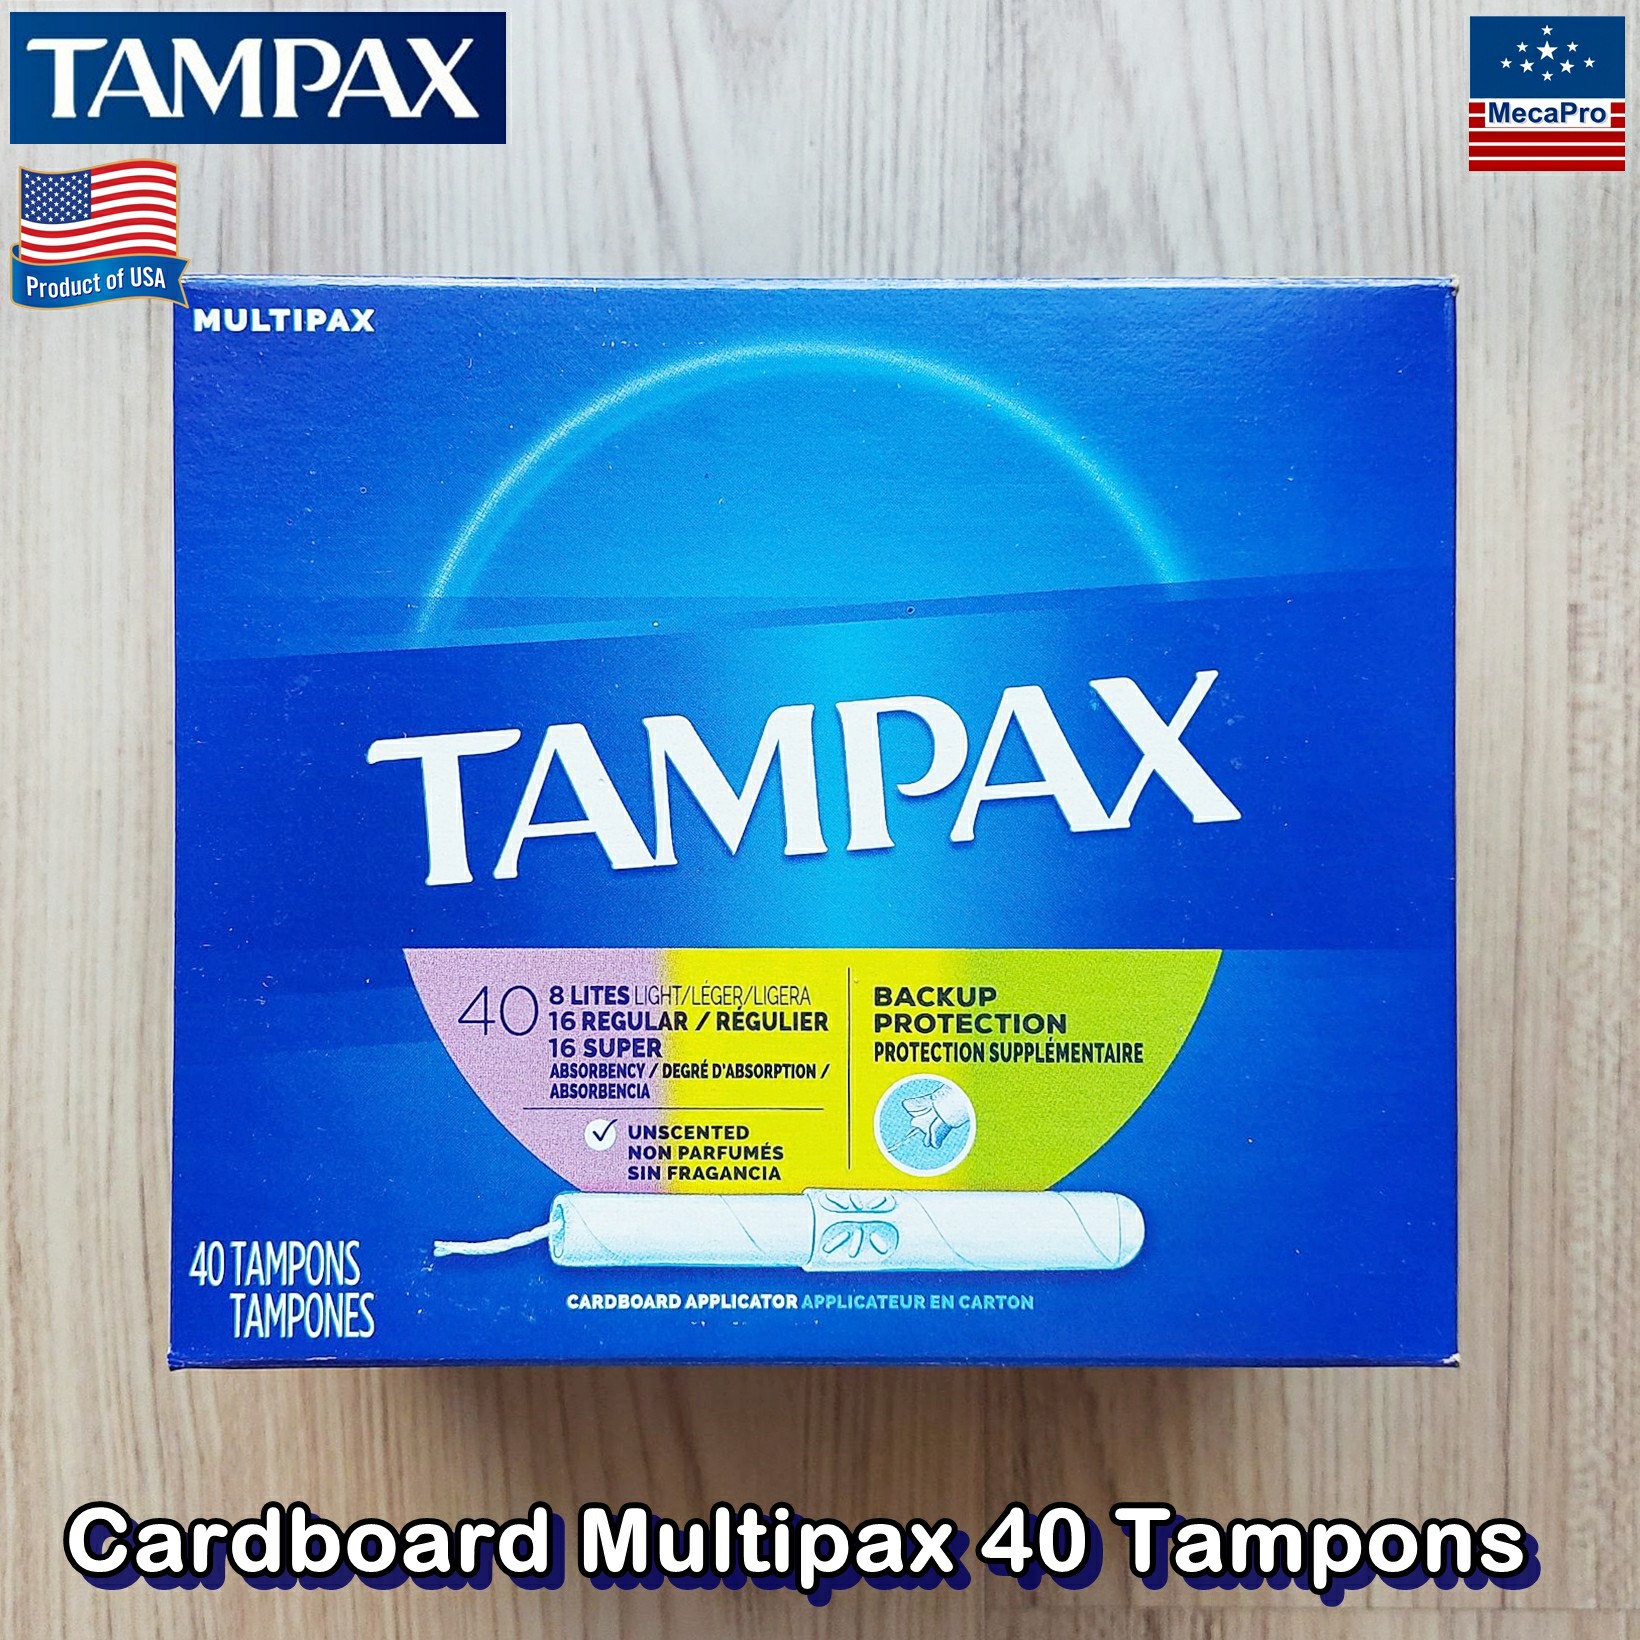 Tampax® Cardboard Multipax 40 Tampons ผ้าอนามัยแบบสอด เหมาะกับวันมาน้อย-มามาก